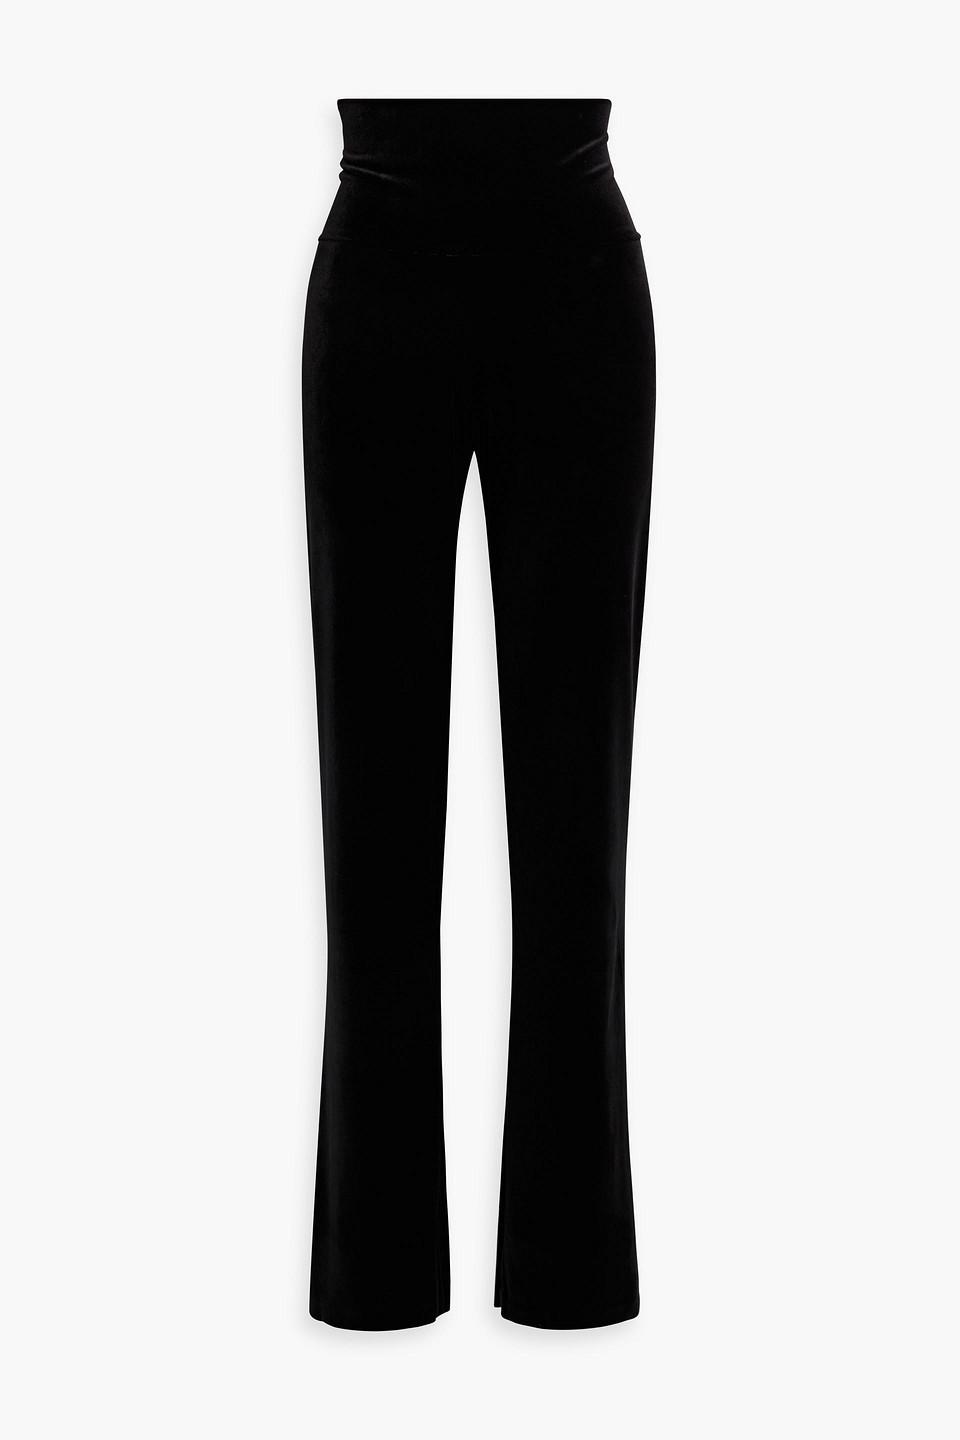 Norma Kamali Stretch-velvet Bootcut Pants in Black